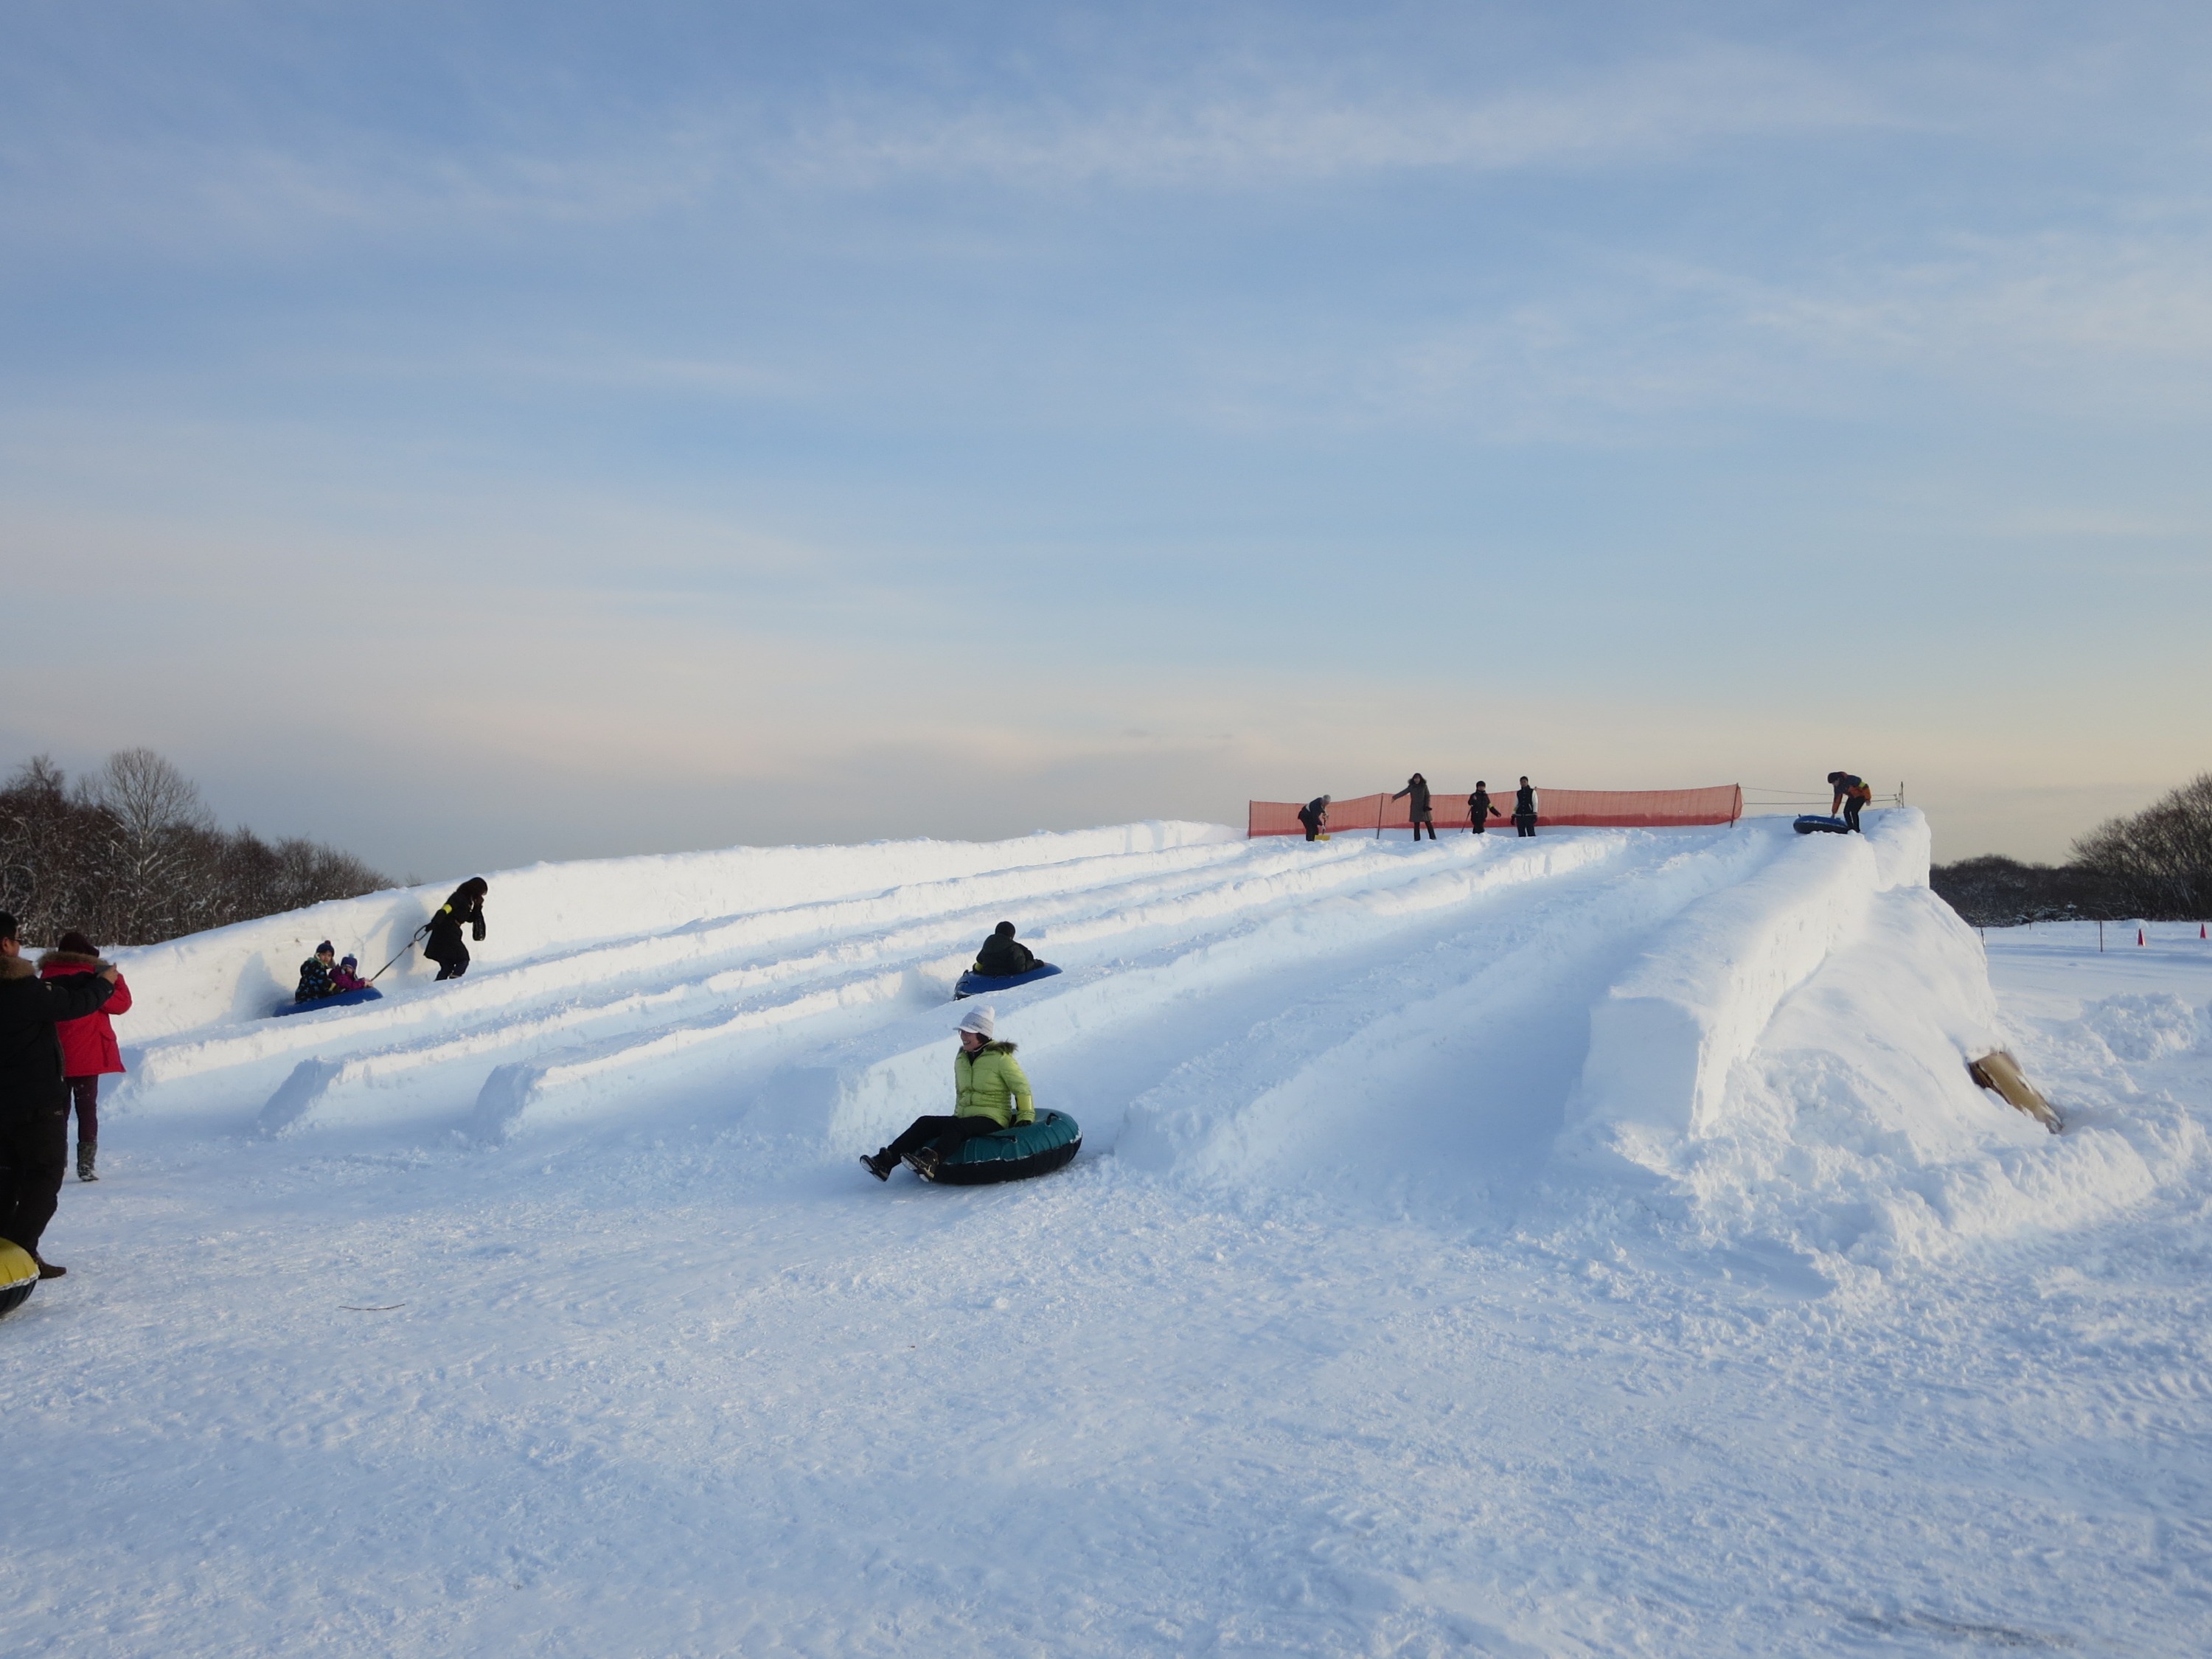 Chitose North Snowland Experience in Hokkaido